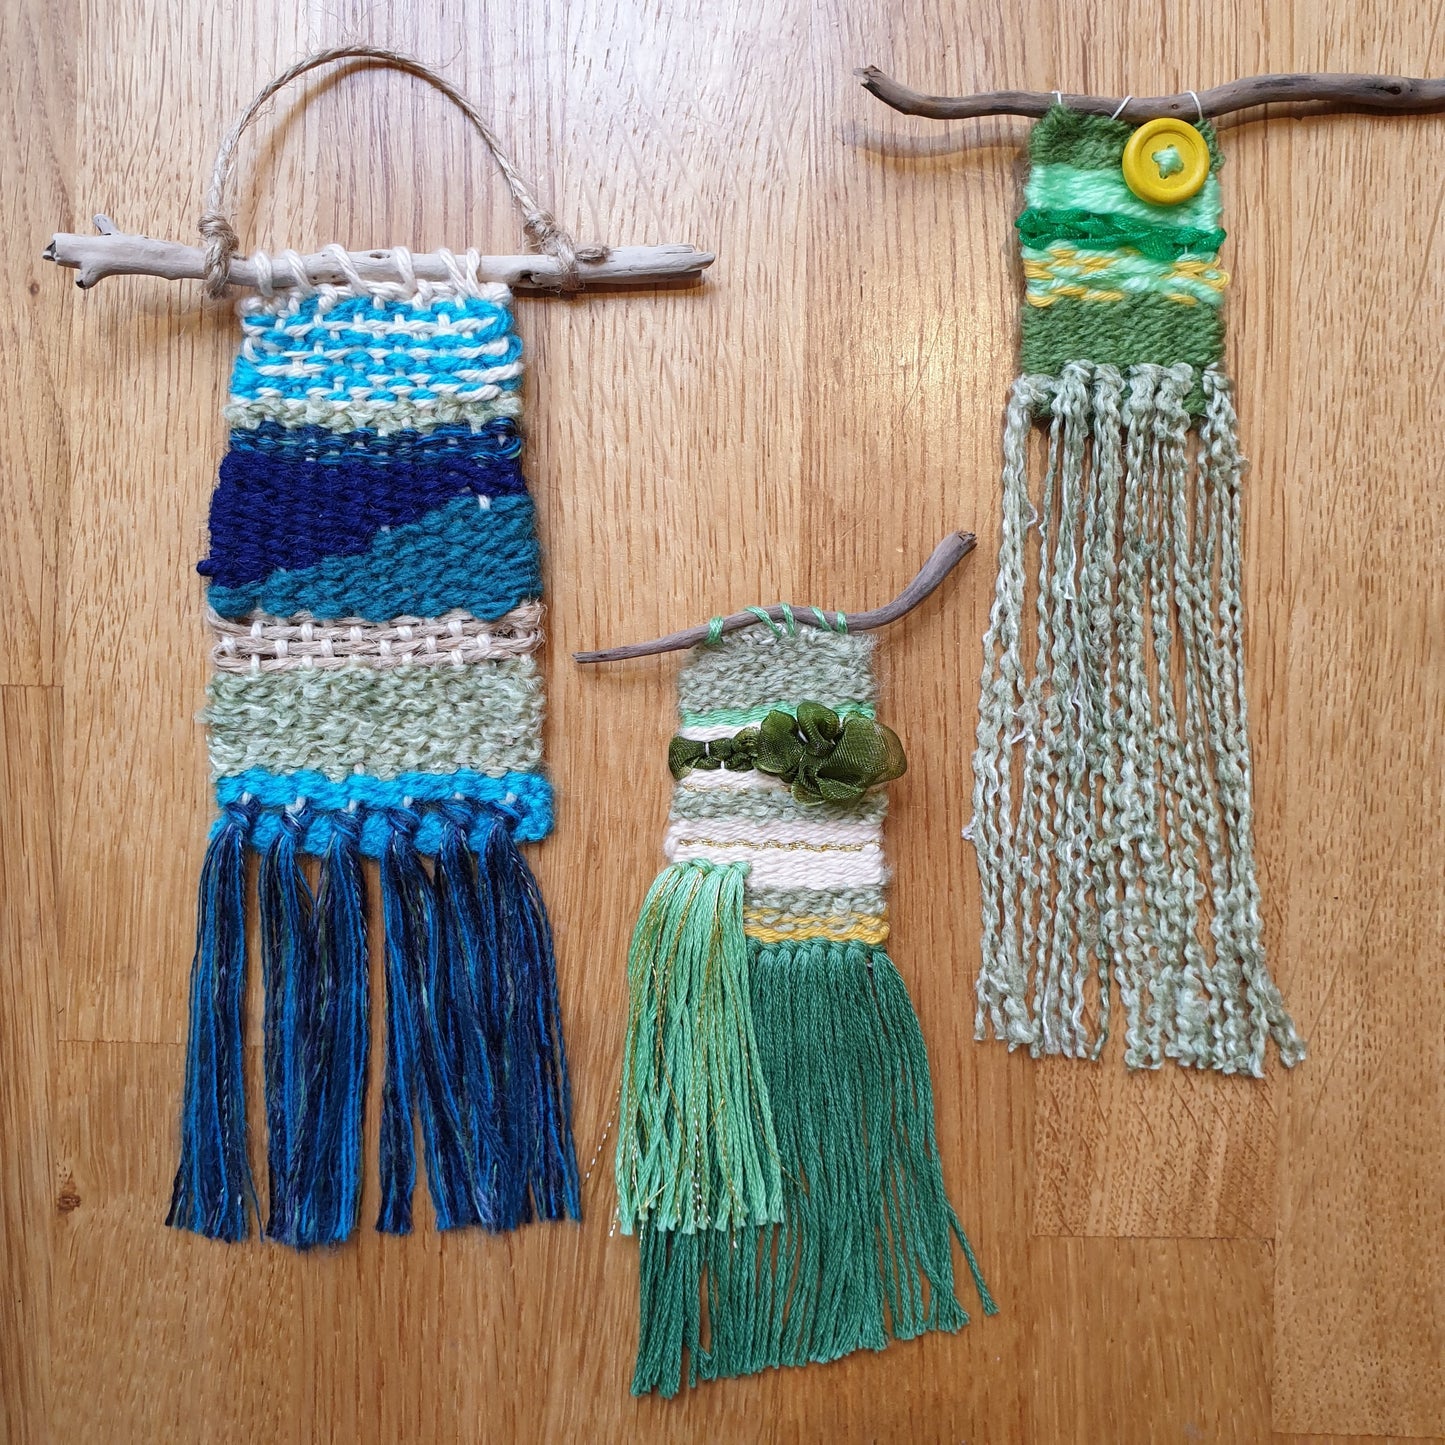 Mini Lap Loom Weaving: #peaceandcraft Workshop Project 2020